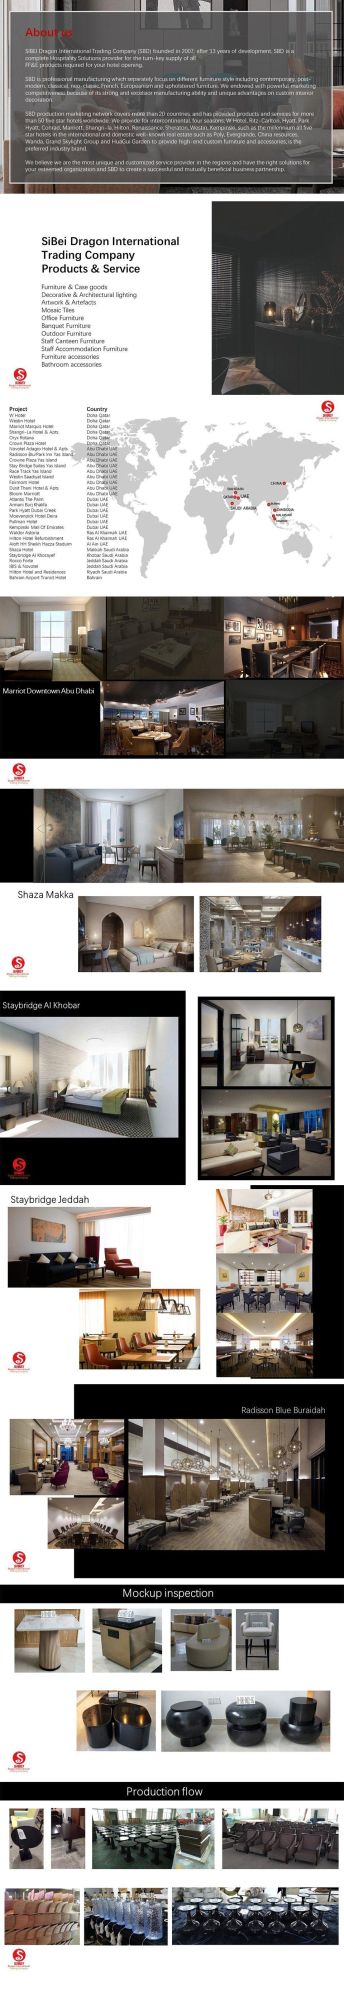 Five Star Hotel Room/ Lobby/ Custom/ Modern Lounge Chair